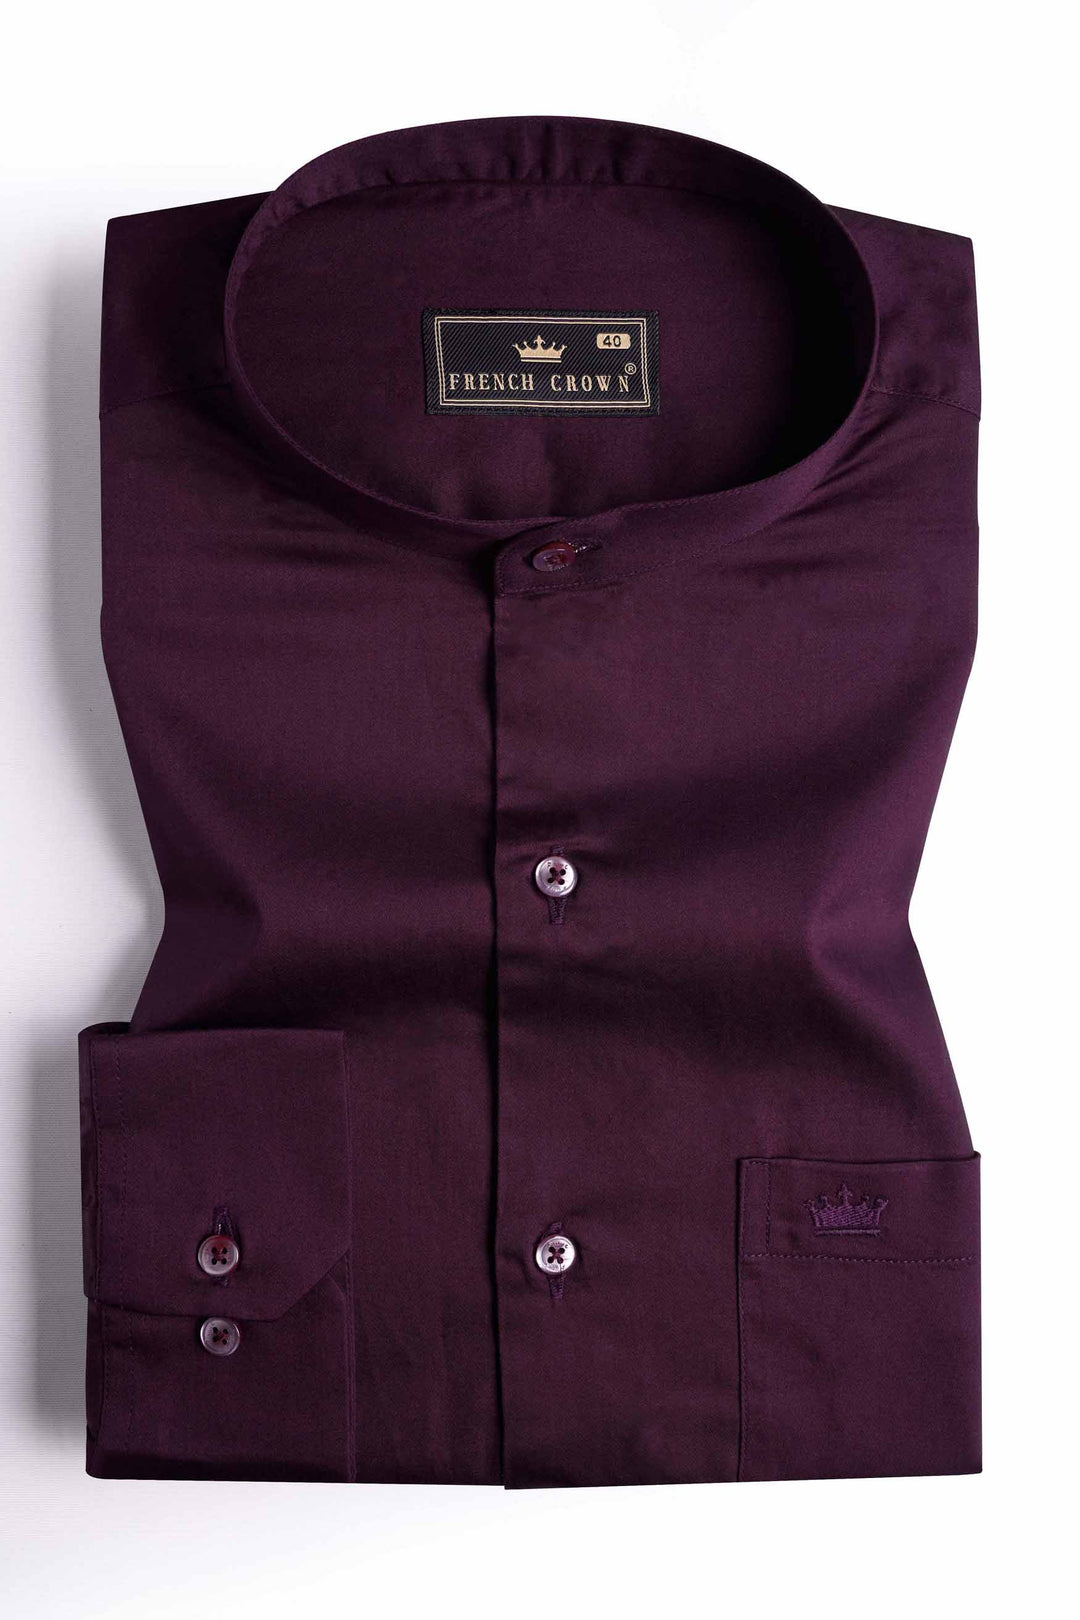 Men's Modern Fit Slacks Burgundy Plain Front Dress Pants OM-TR